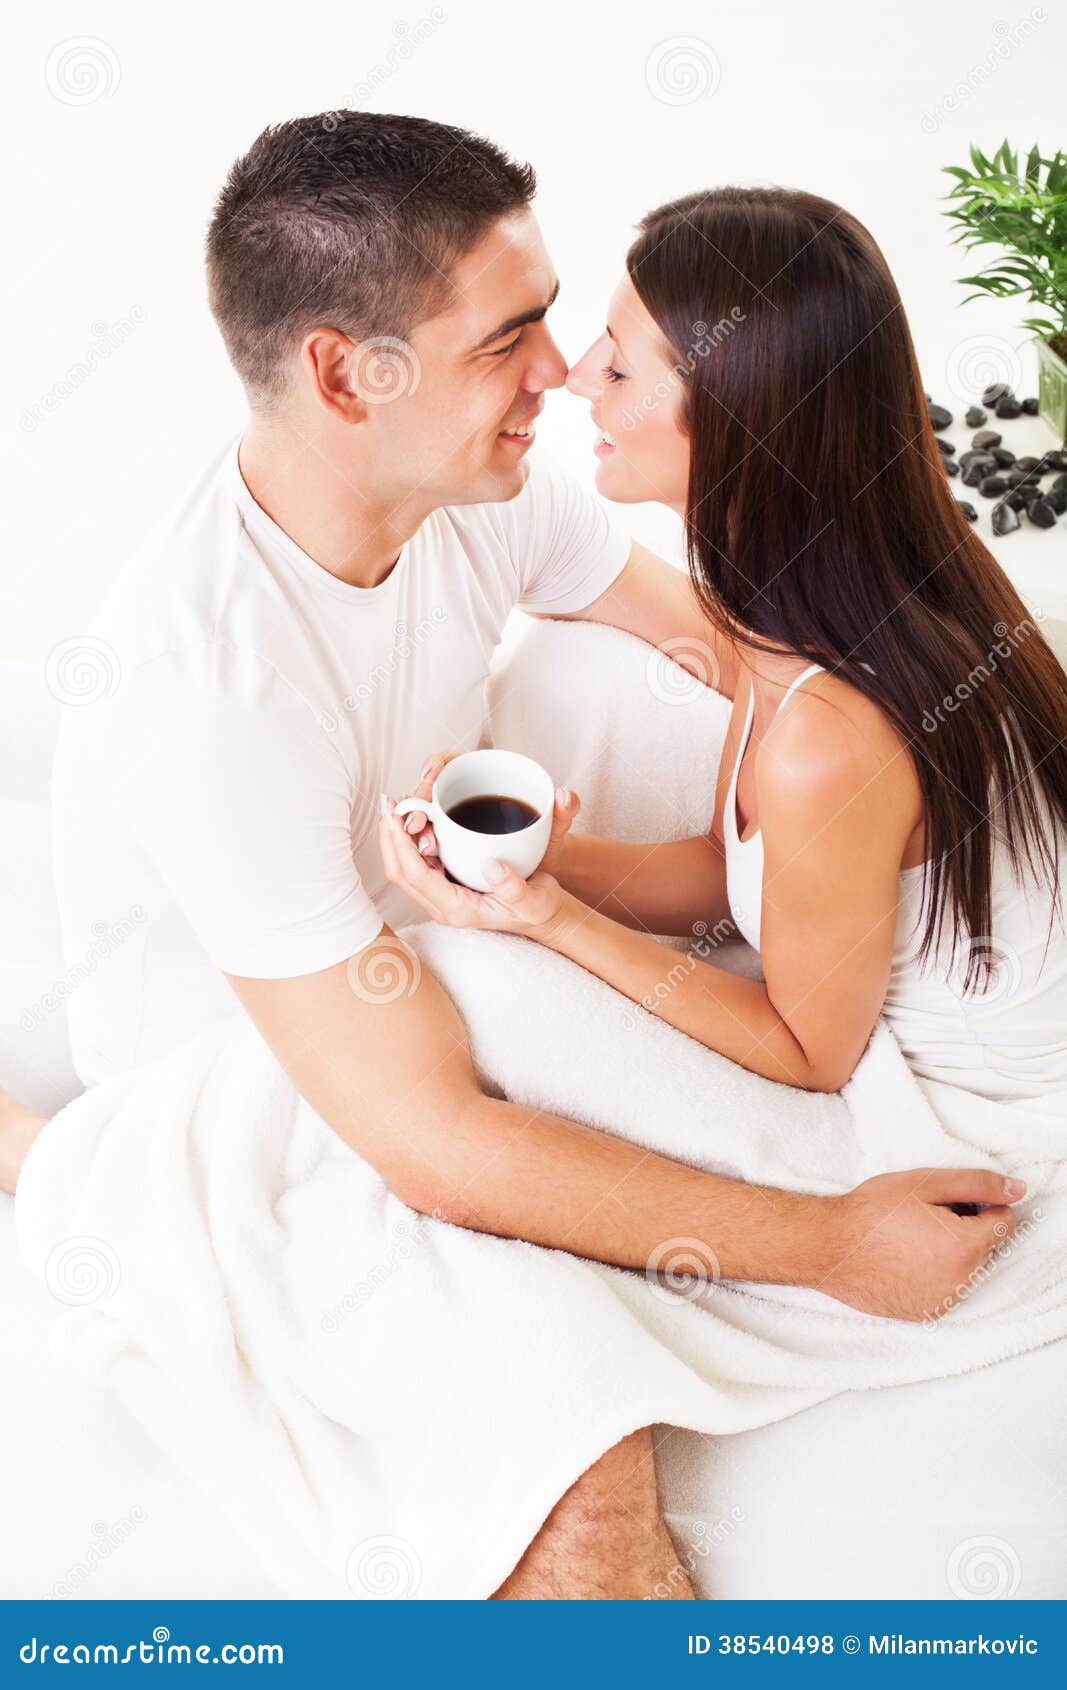 sex Couple morning